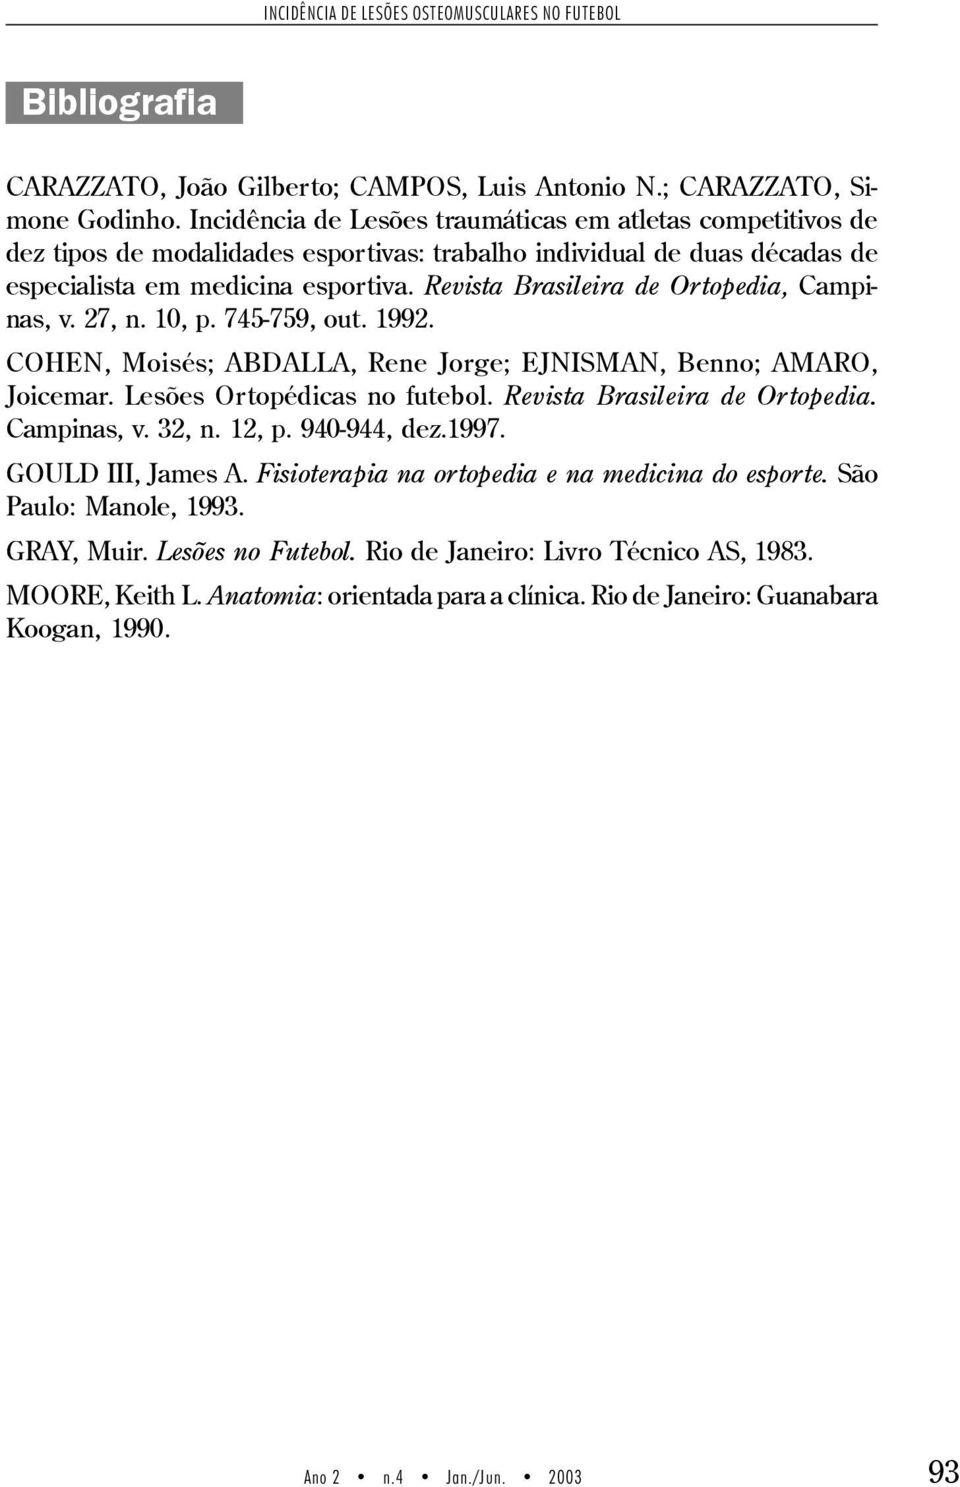 Revista Brasileira de Ortopedia, Campinas, v. 27, n. 10, p. 745-759, out. 1992. COHEN, Moisés; ABDALLA, Rene Jorge; EJNISMAN, Benno; AMARO, Joicemar. Lesões Ortopédicas no futebol.